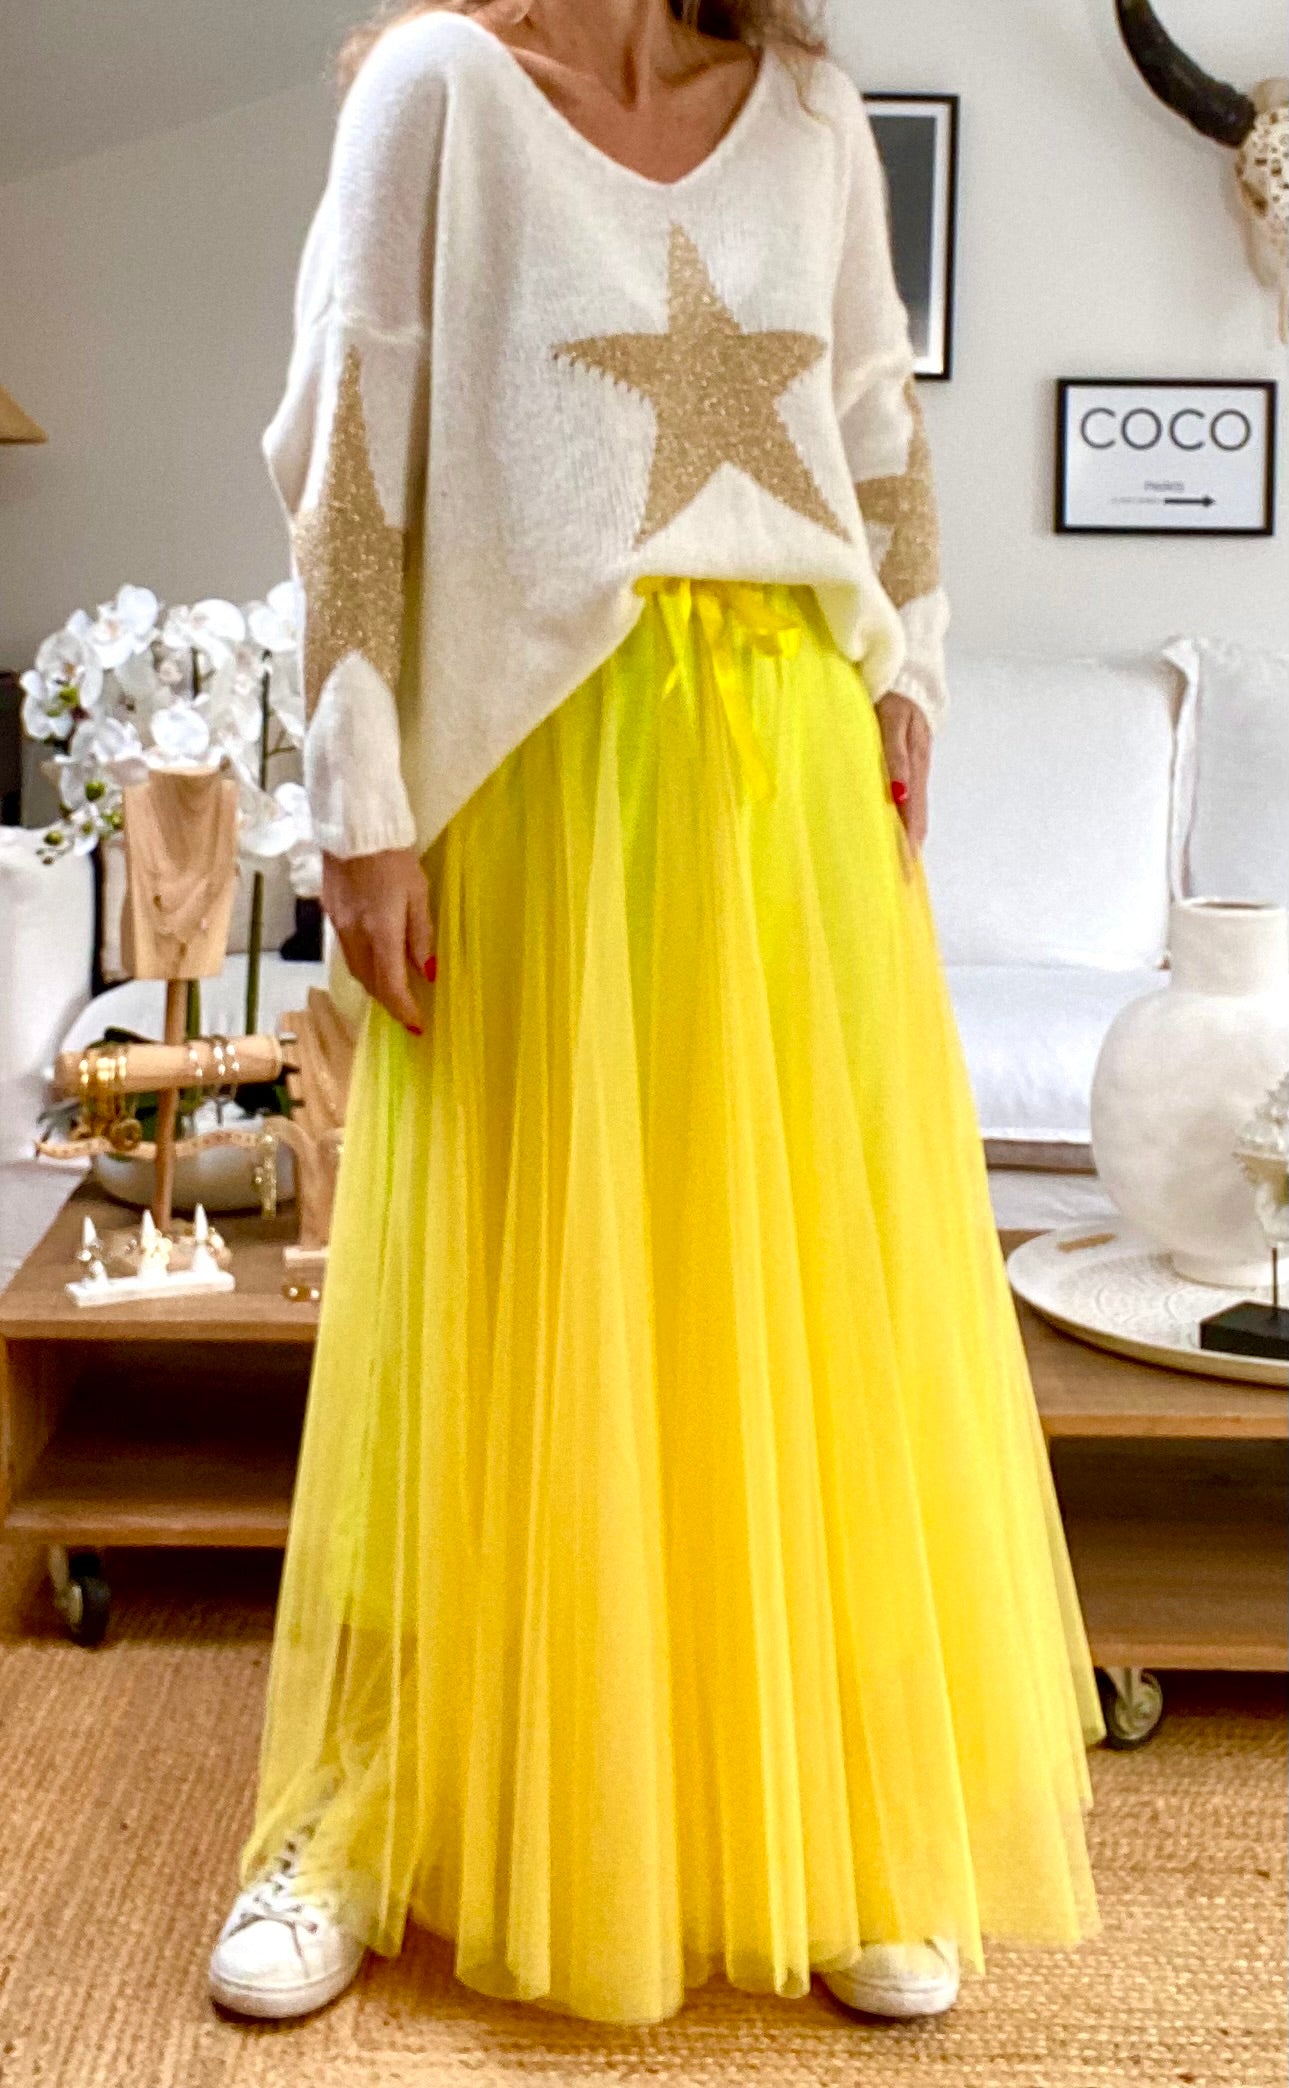 Neon yellow tulle skirt NINI 2 sizes